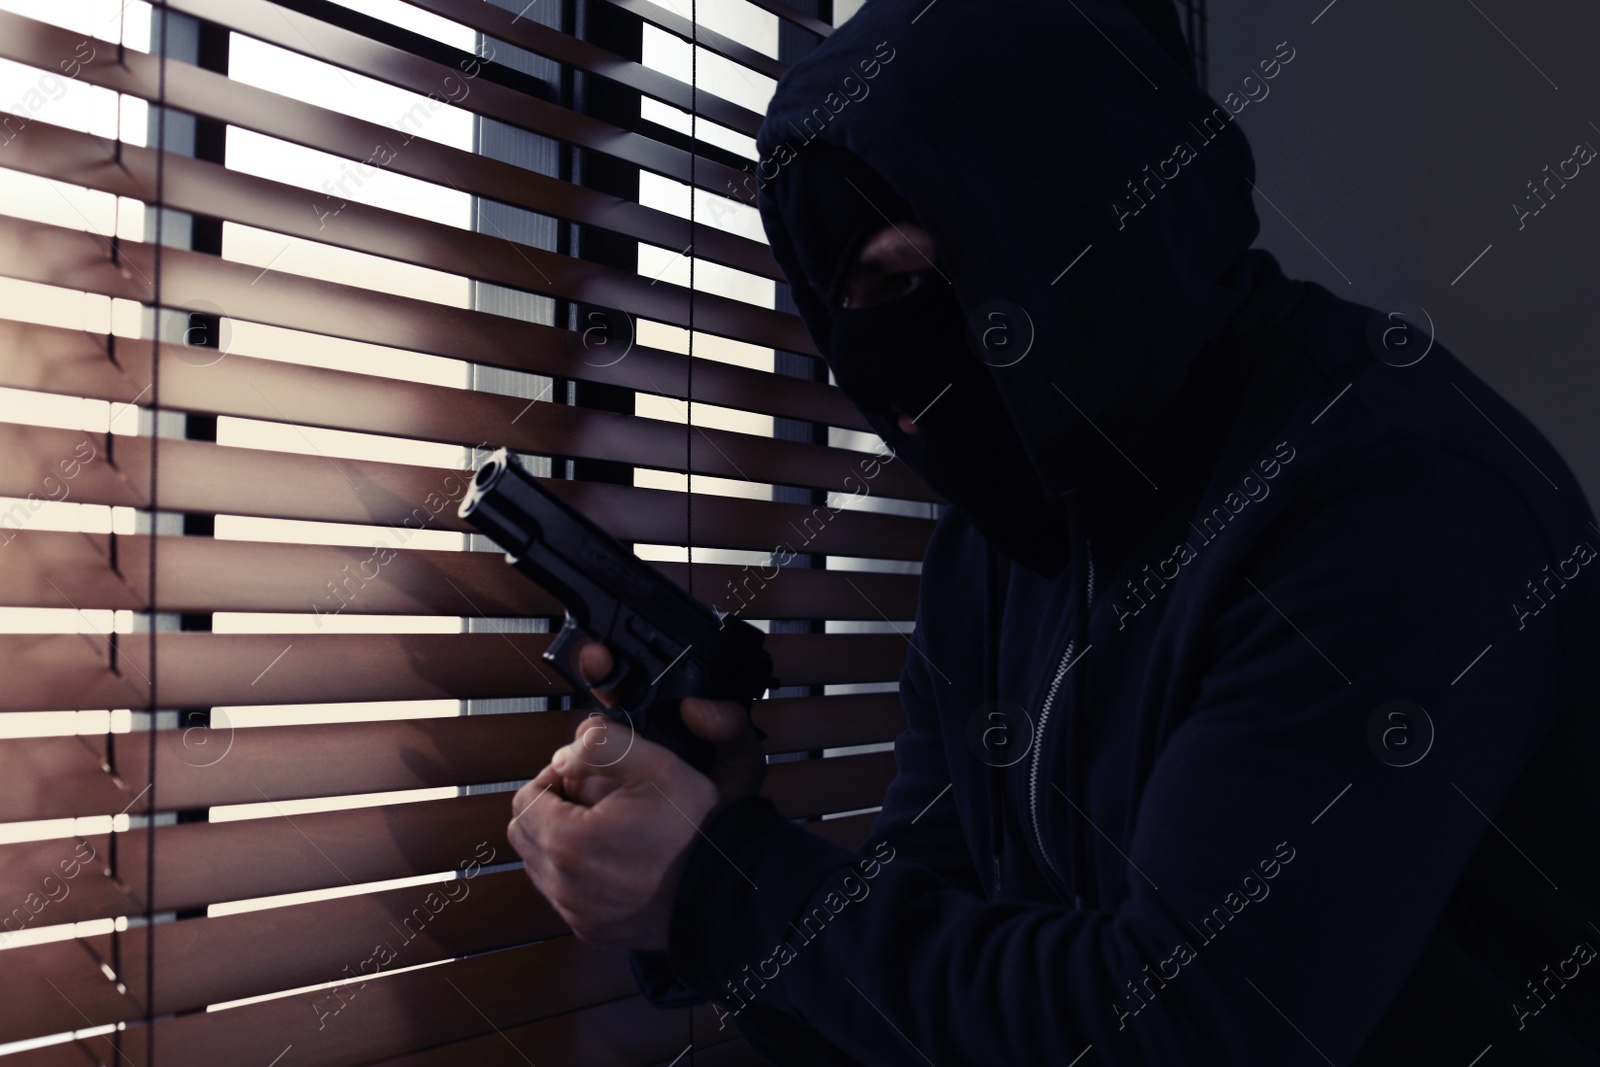 Photo of Masked man with gun spying through window blinds indoors. Dangerous criminal